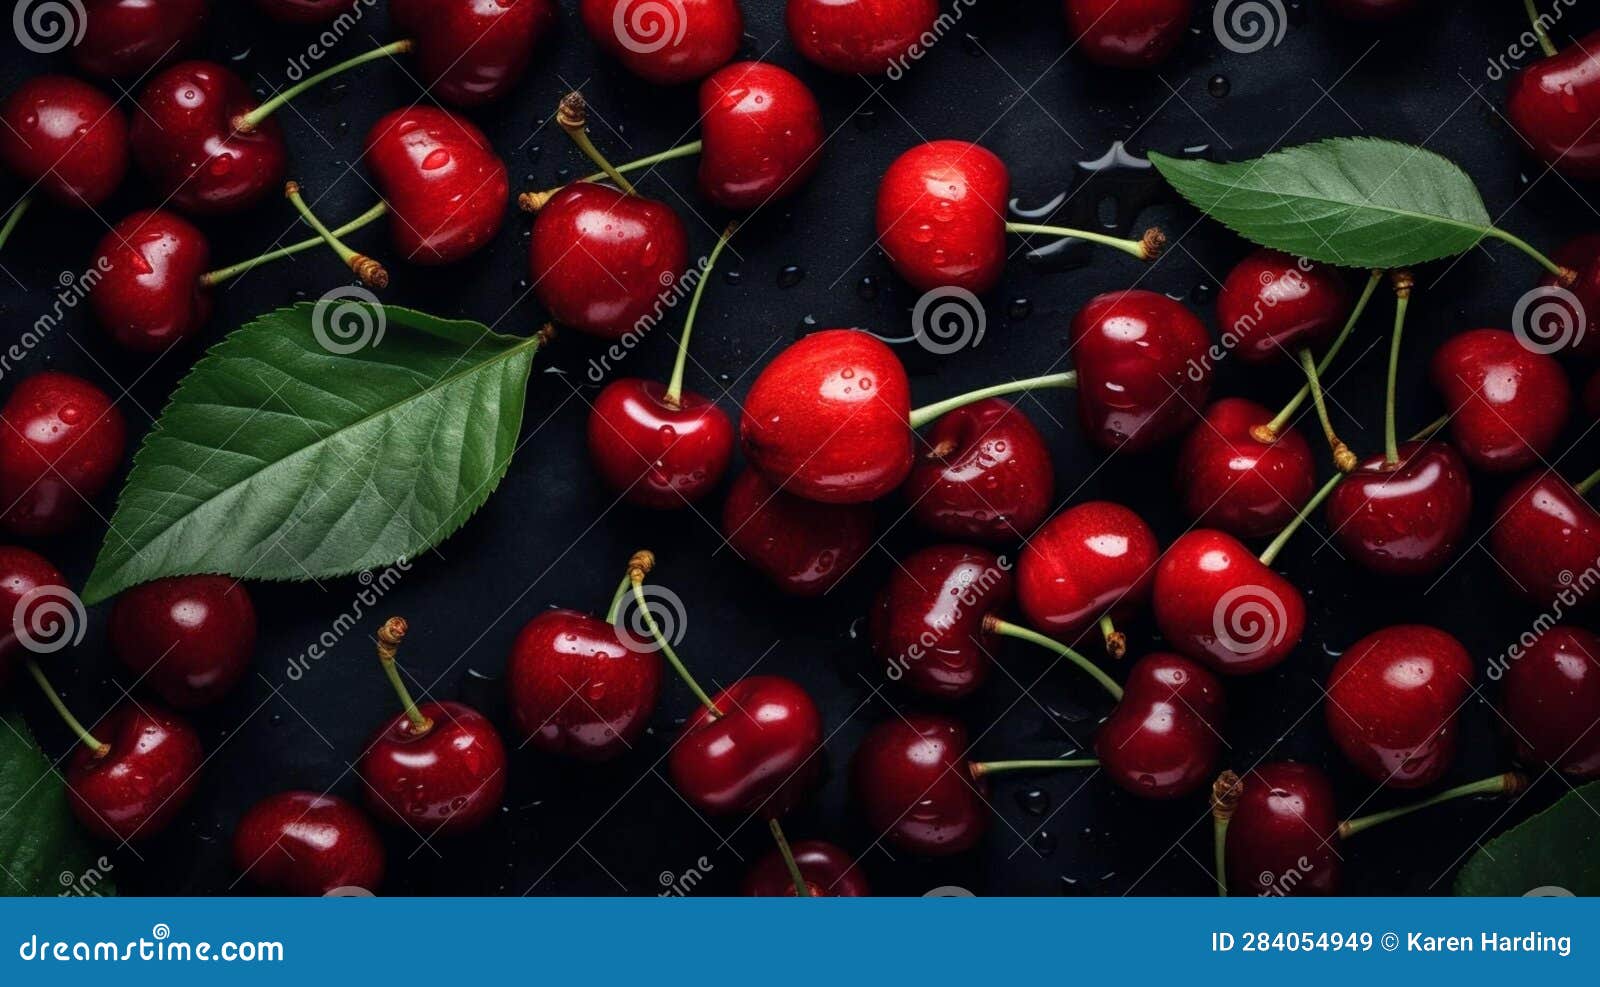 Background of cherries stock illustration. Illustration of scattered ...